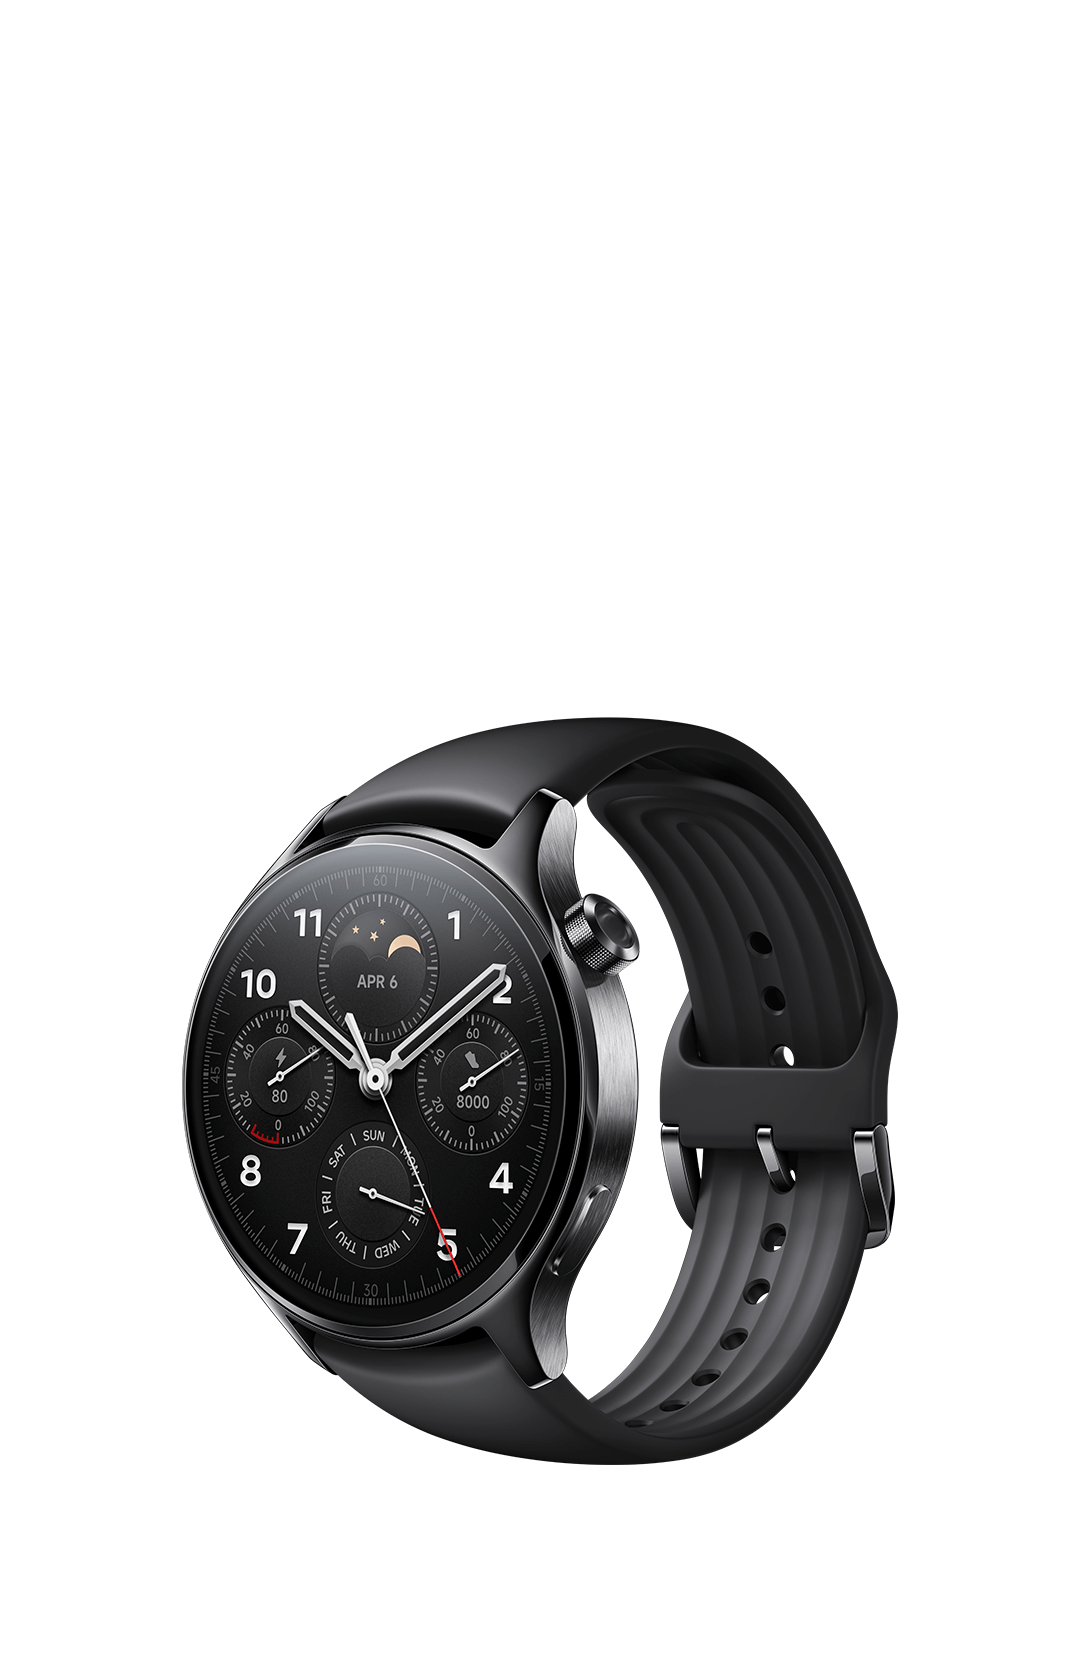 Xiaomi Watch S1 GL